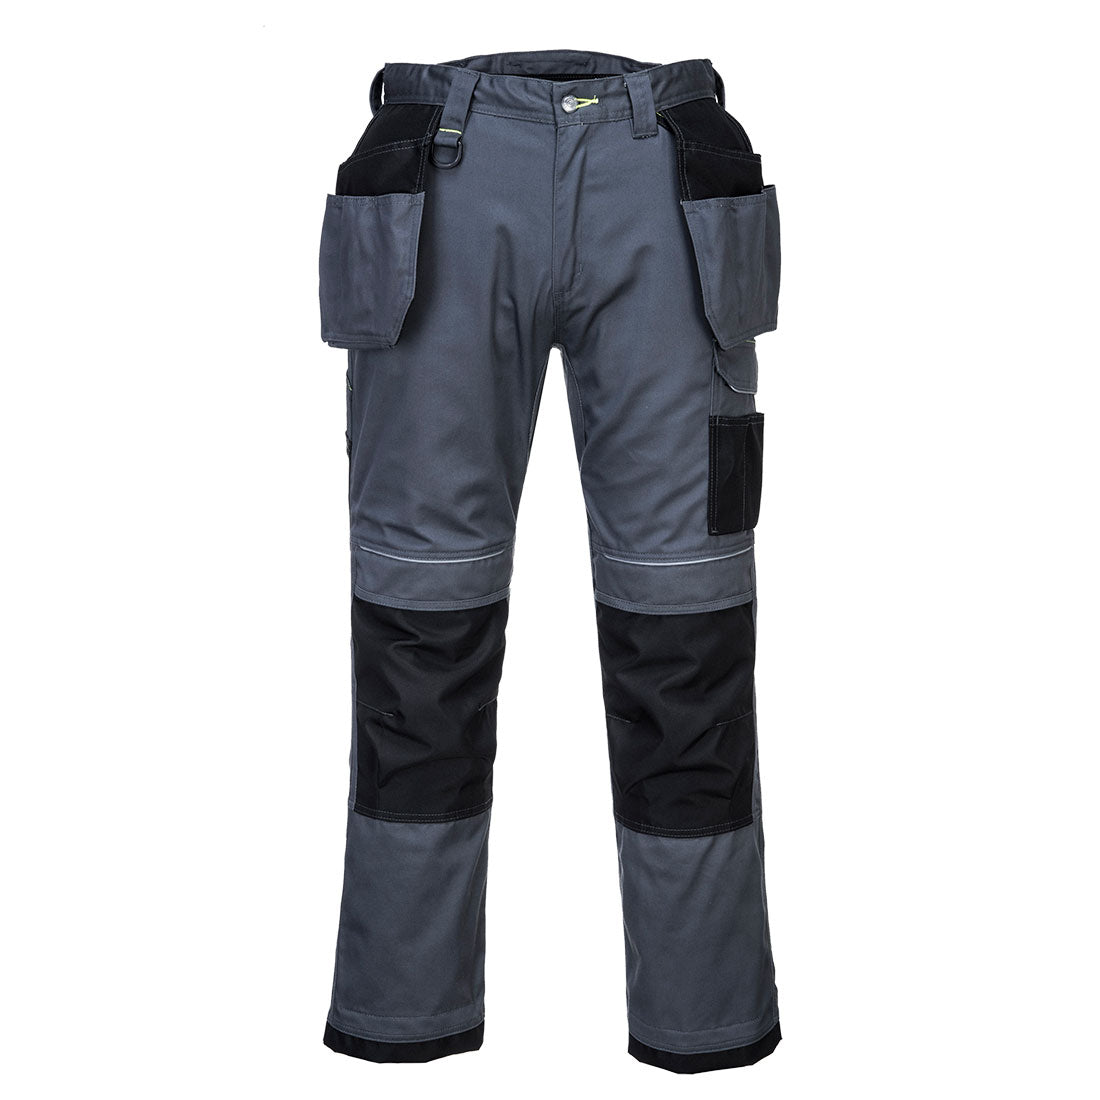 Portwest T602 - Grey/Black  36 Short PW3 Holster Work Trousers Combat Cargo Pants